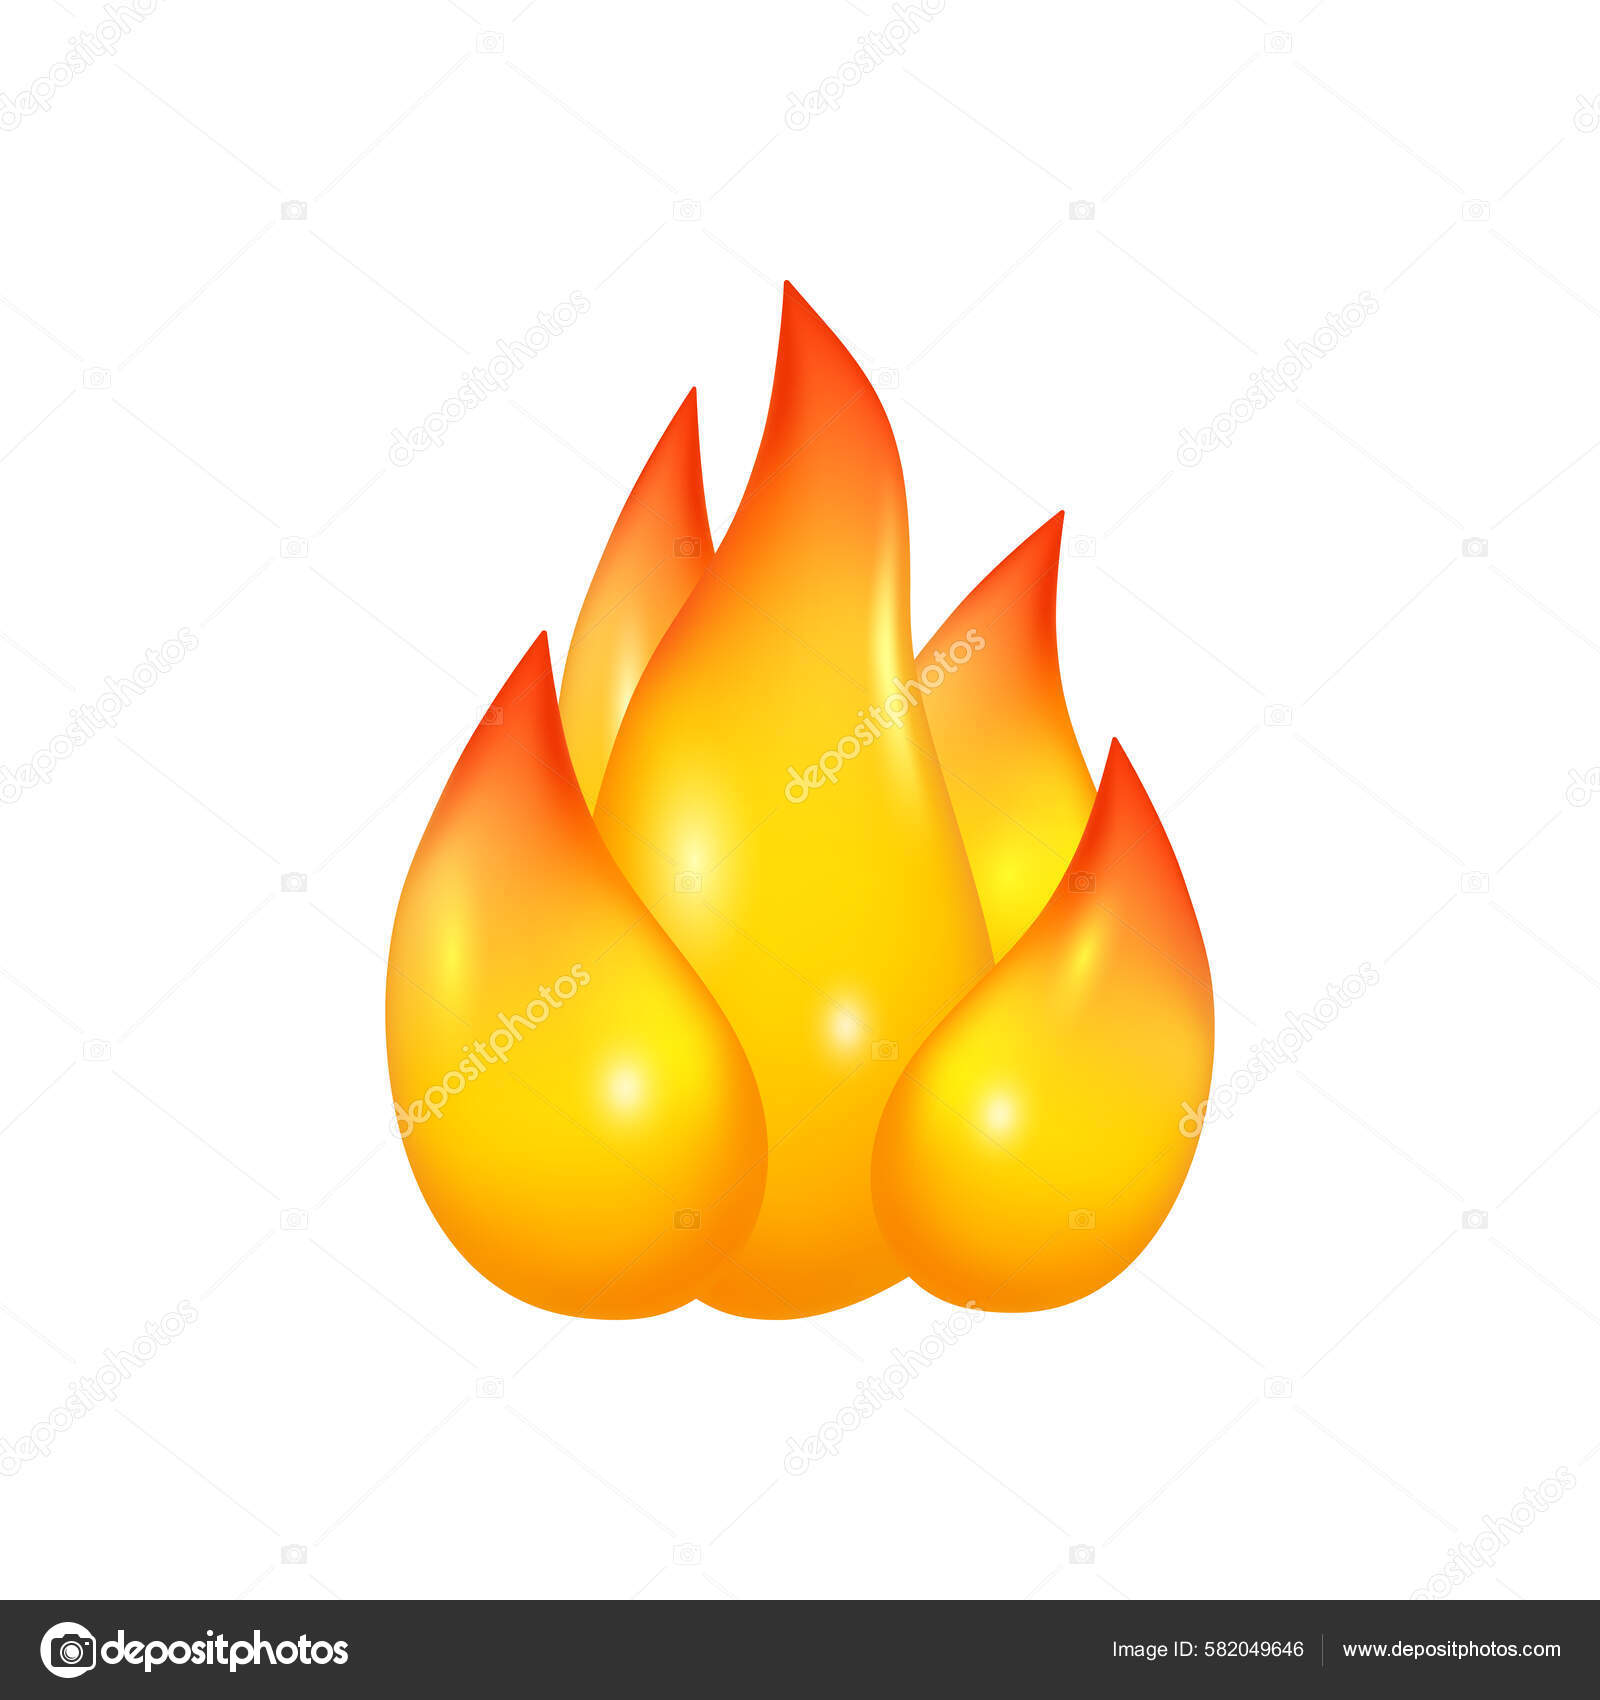 Chama brilhante fogo de desenho animado tocha ou fósforo a arder